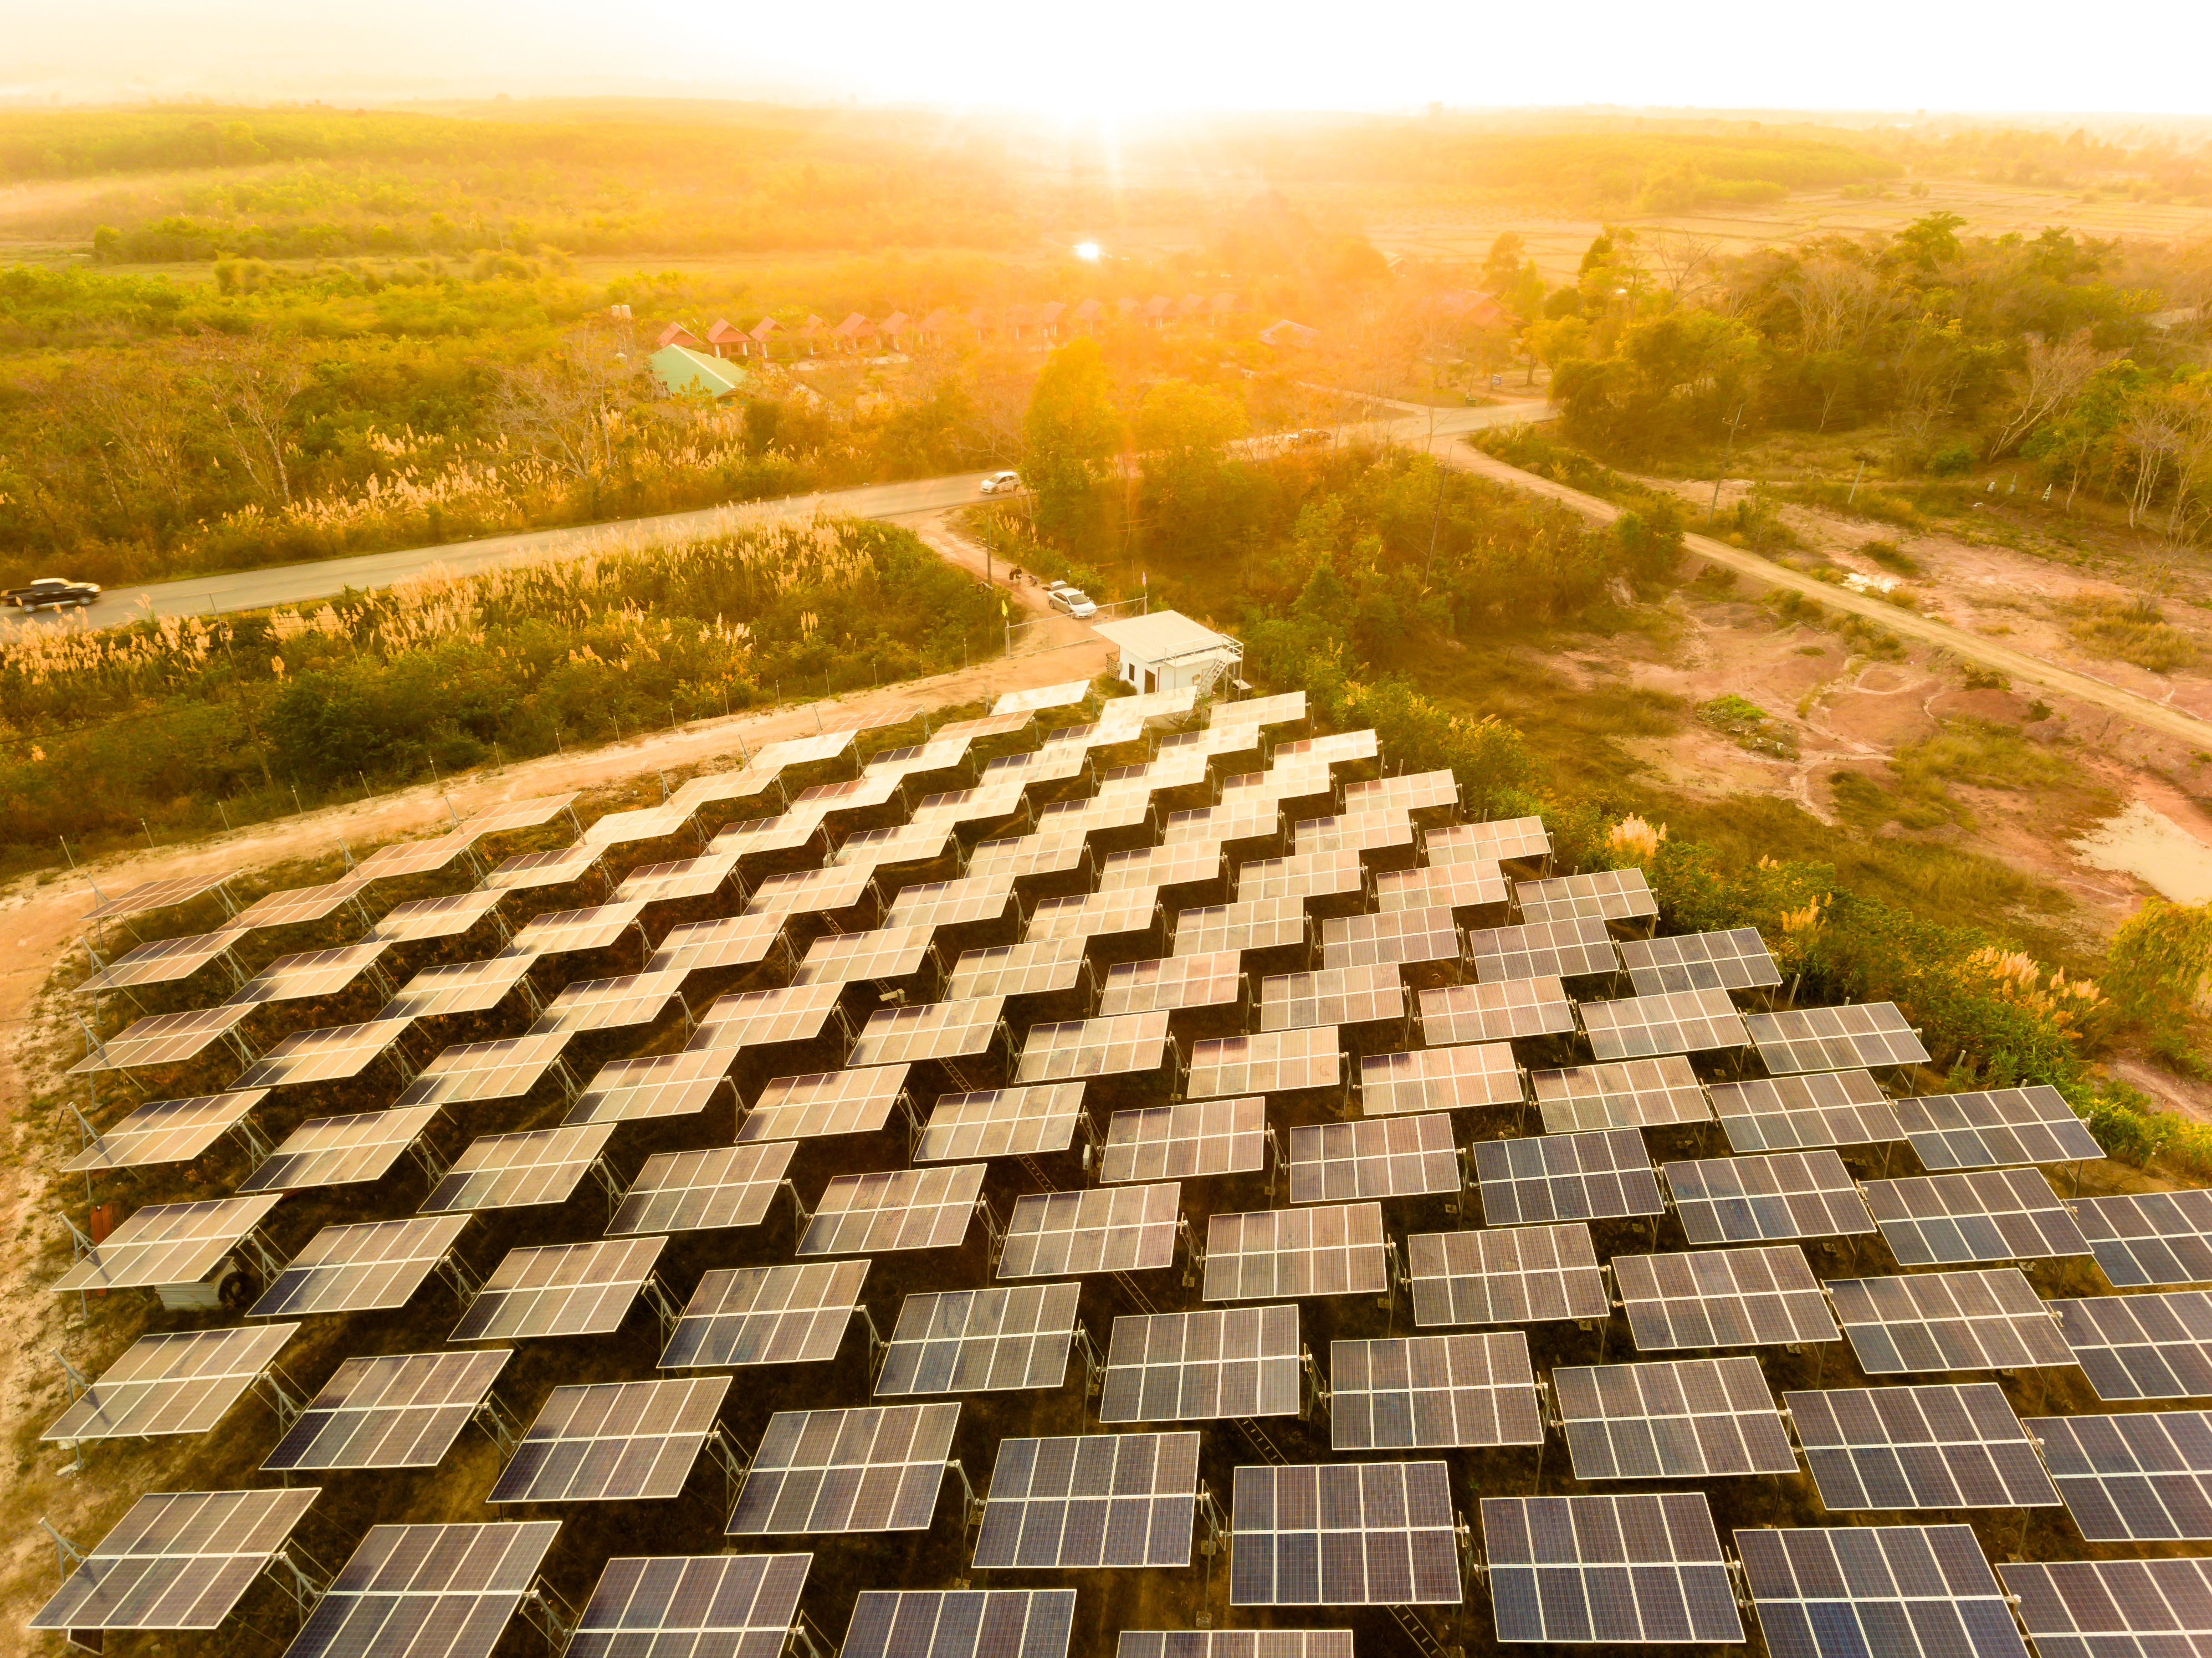 Community solar farm